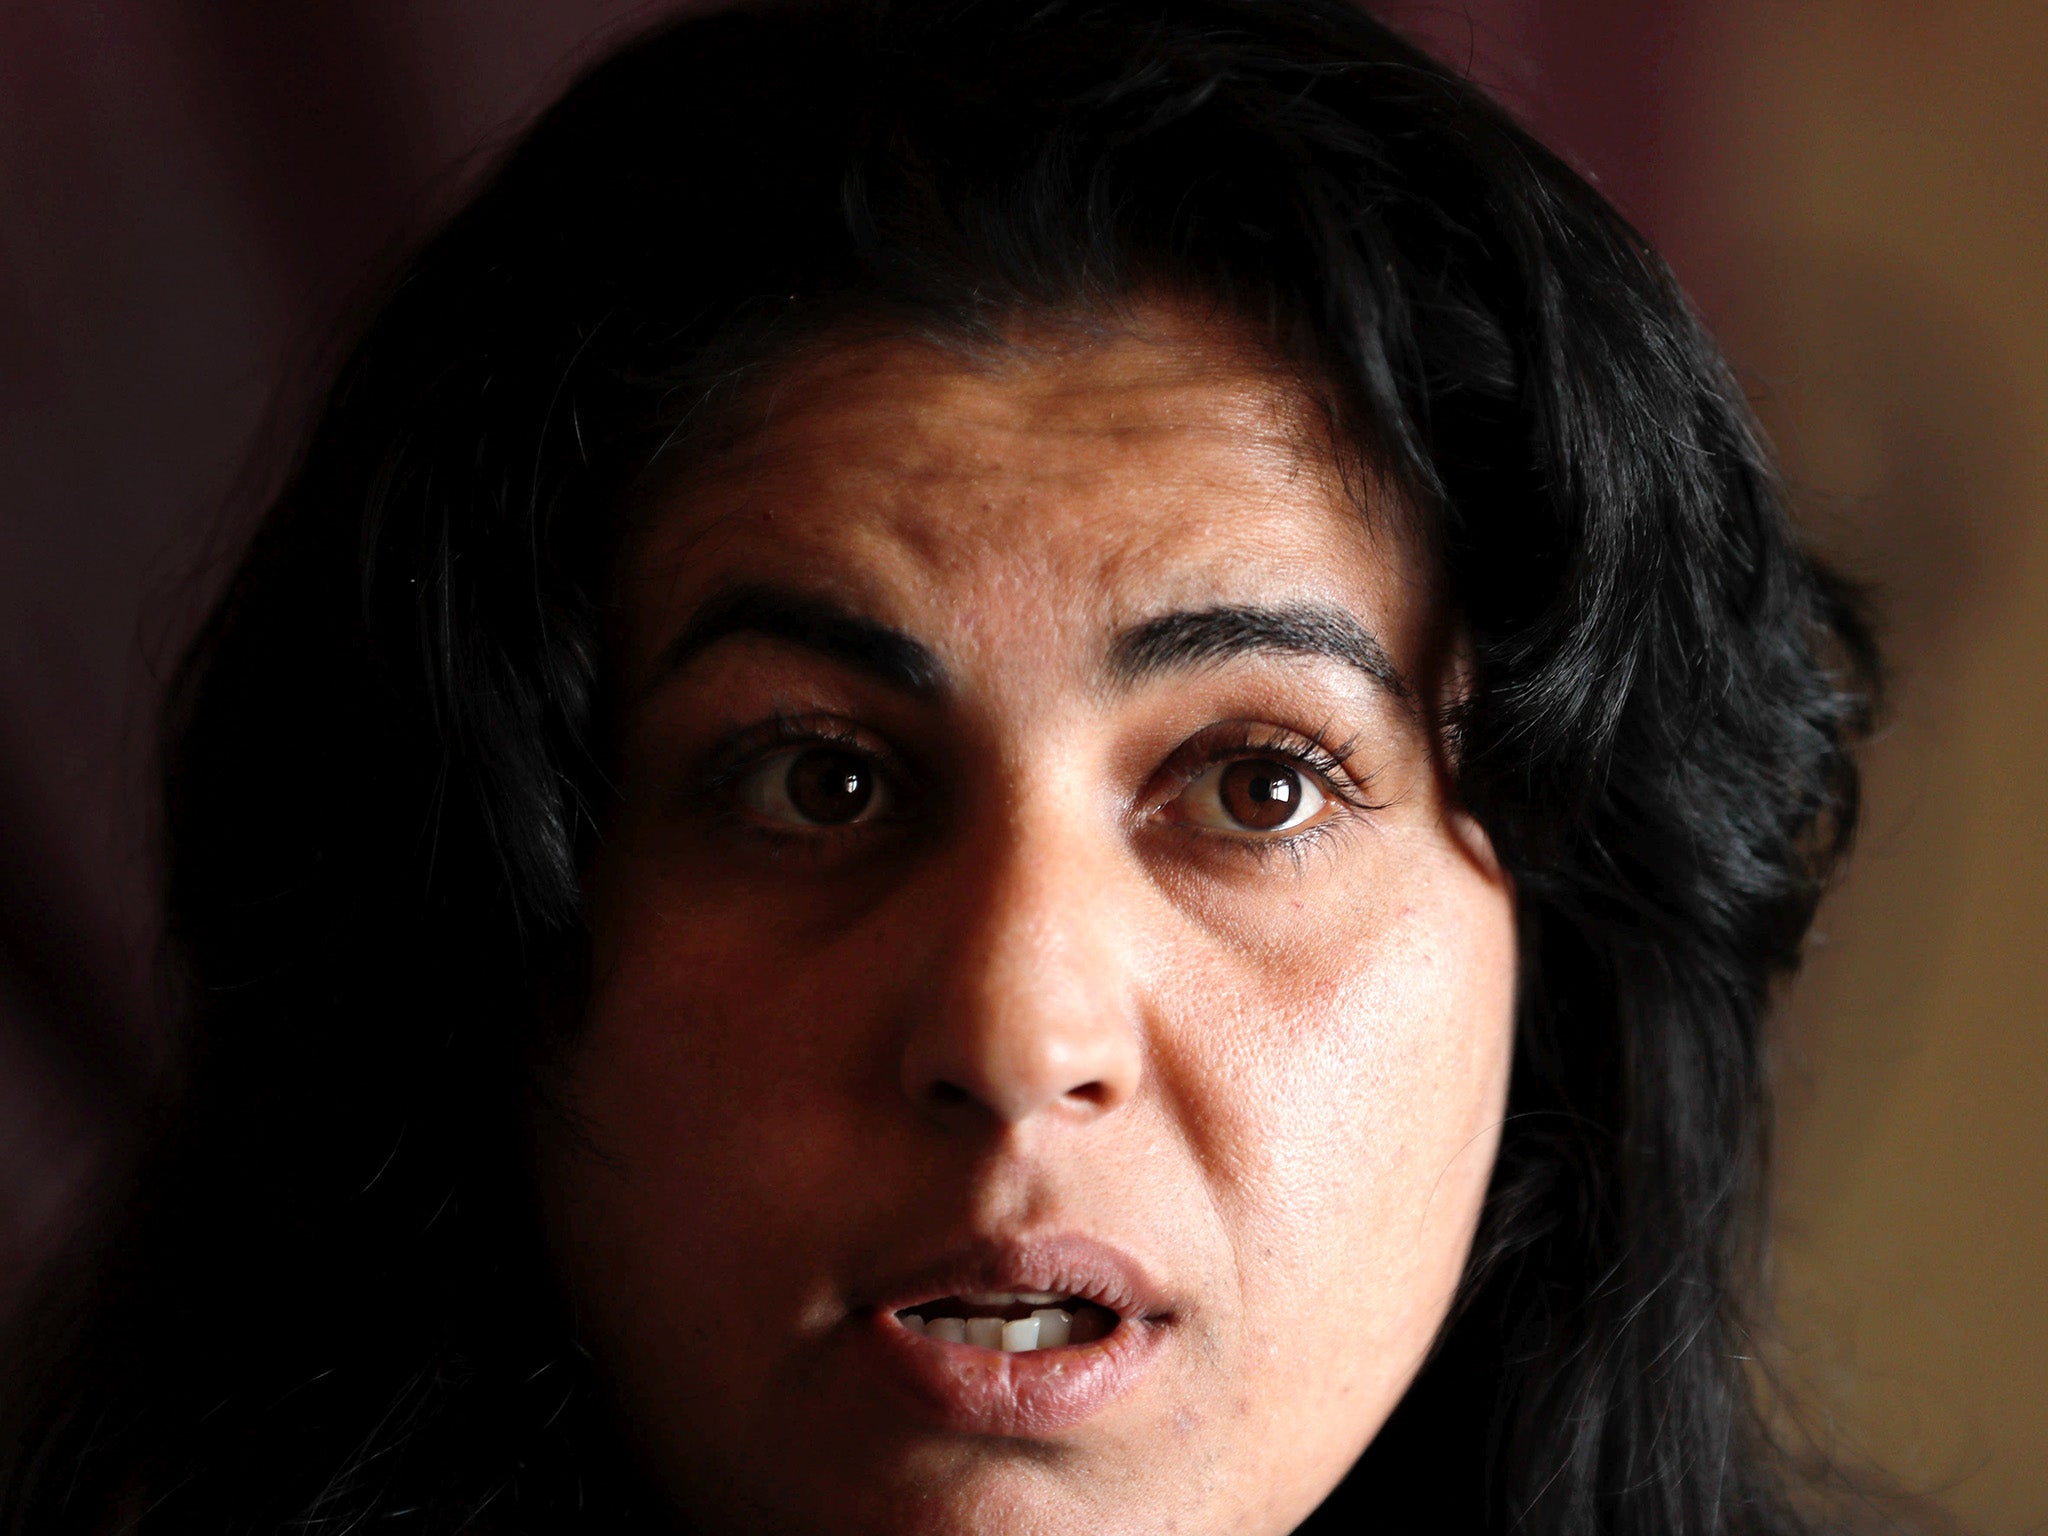 The co-leader of Raqqa Civil Council, Leila Mustafa